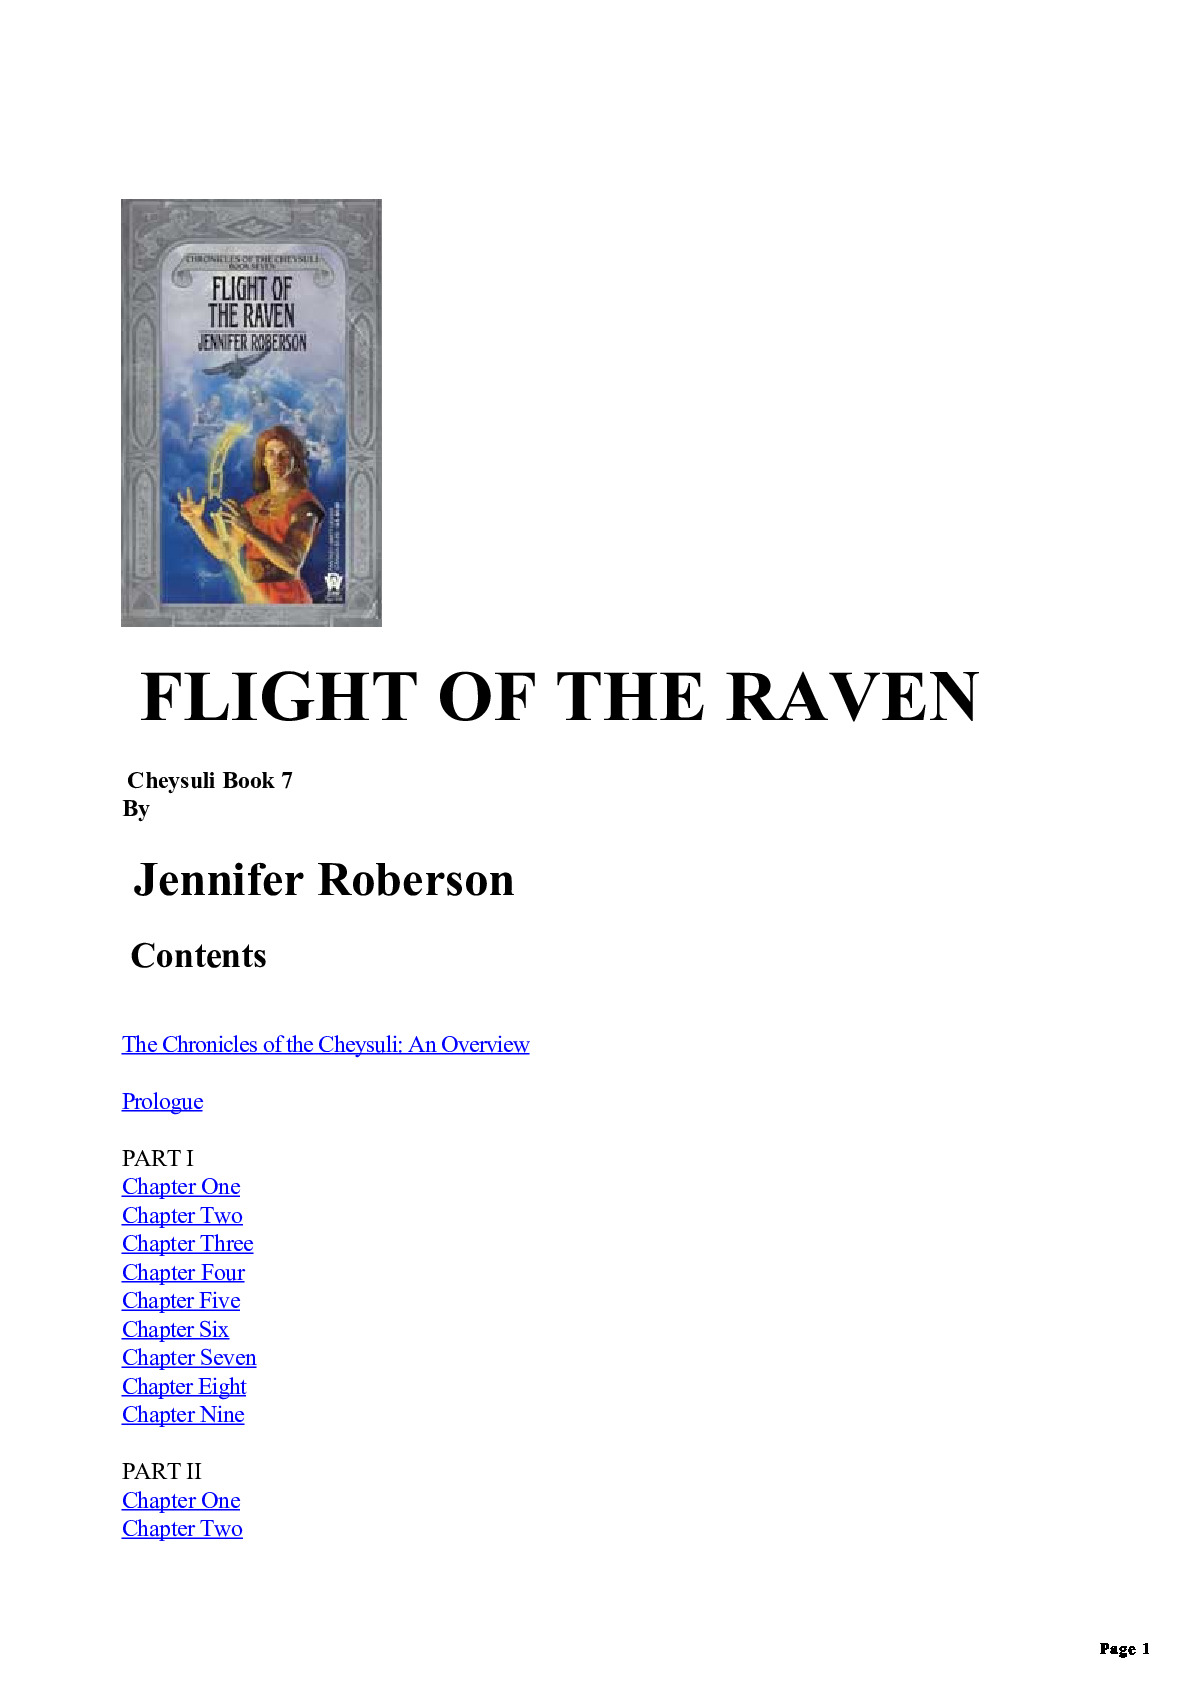 Jennifer Roberson – CotC 7 – Flight of the Raven